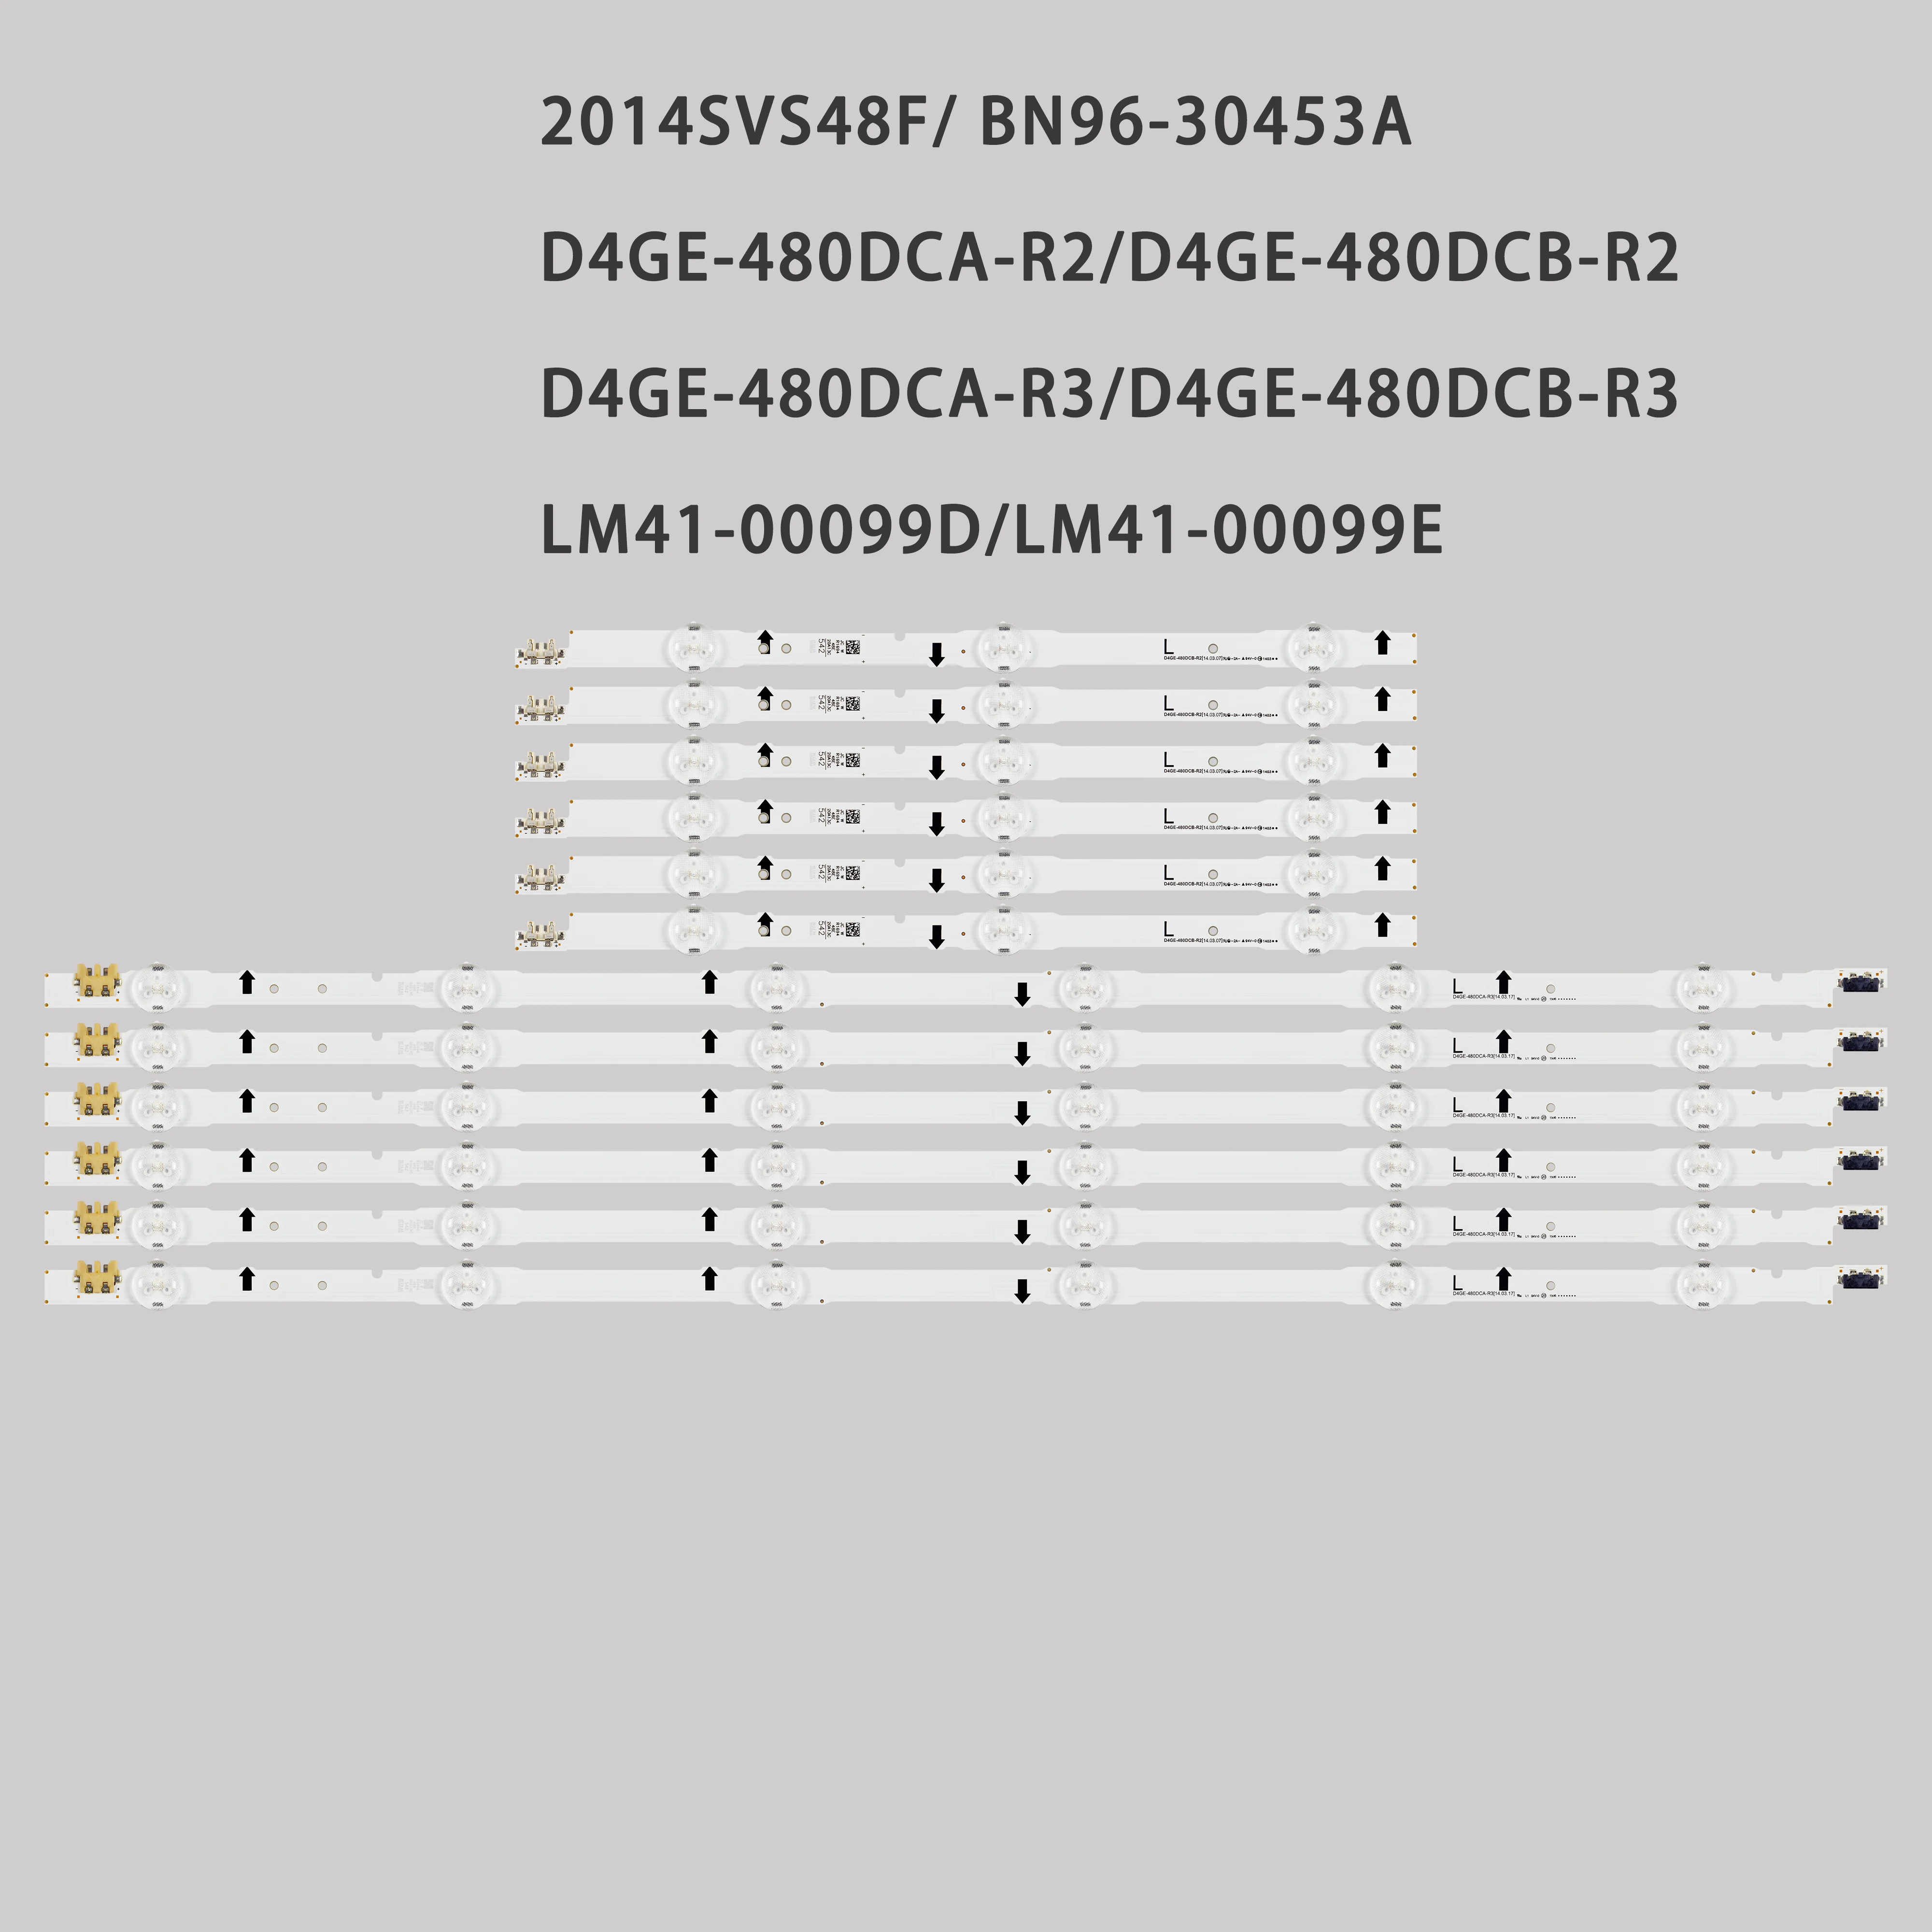 

12 PCS LED backlight strip D4GE-480DCA 480DCB-R3 R2 for Samsung UE48H6400 UE48H6200AK BN96-30453A 30454A 38891A 38892A 30418A